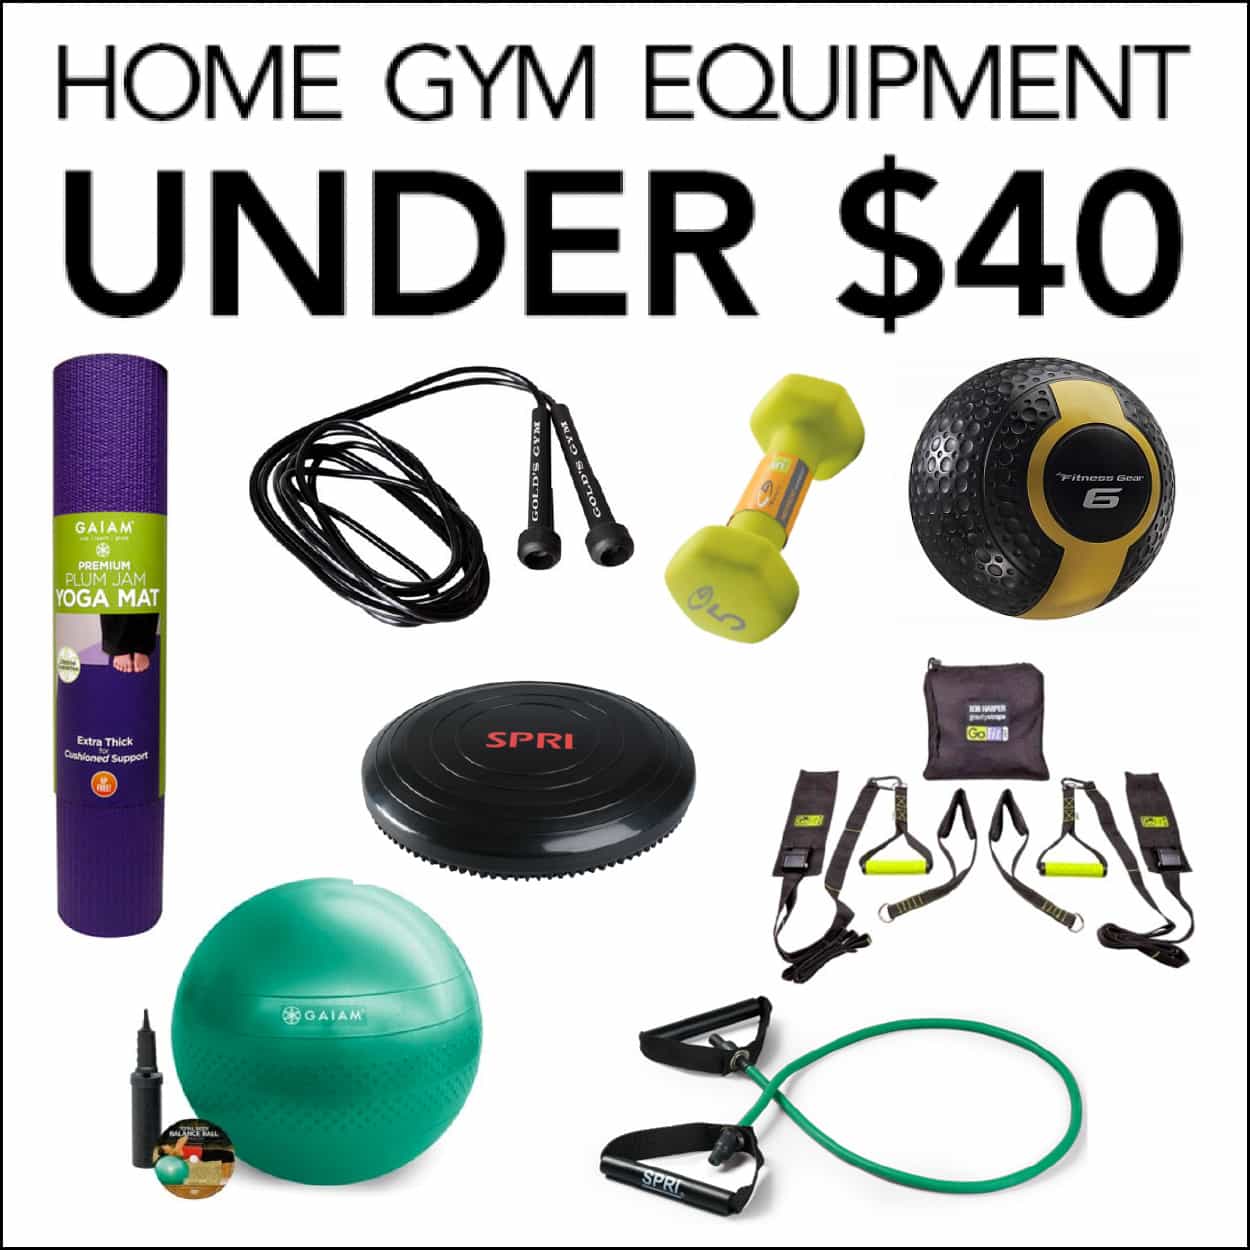 The Best Home Gym Equipment Under $40